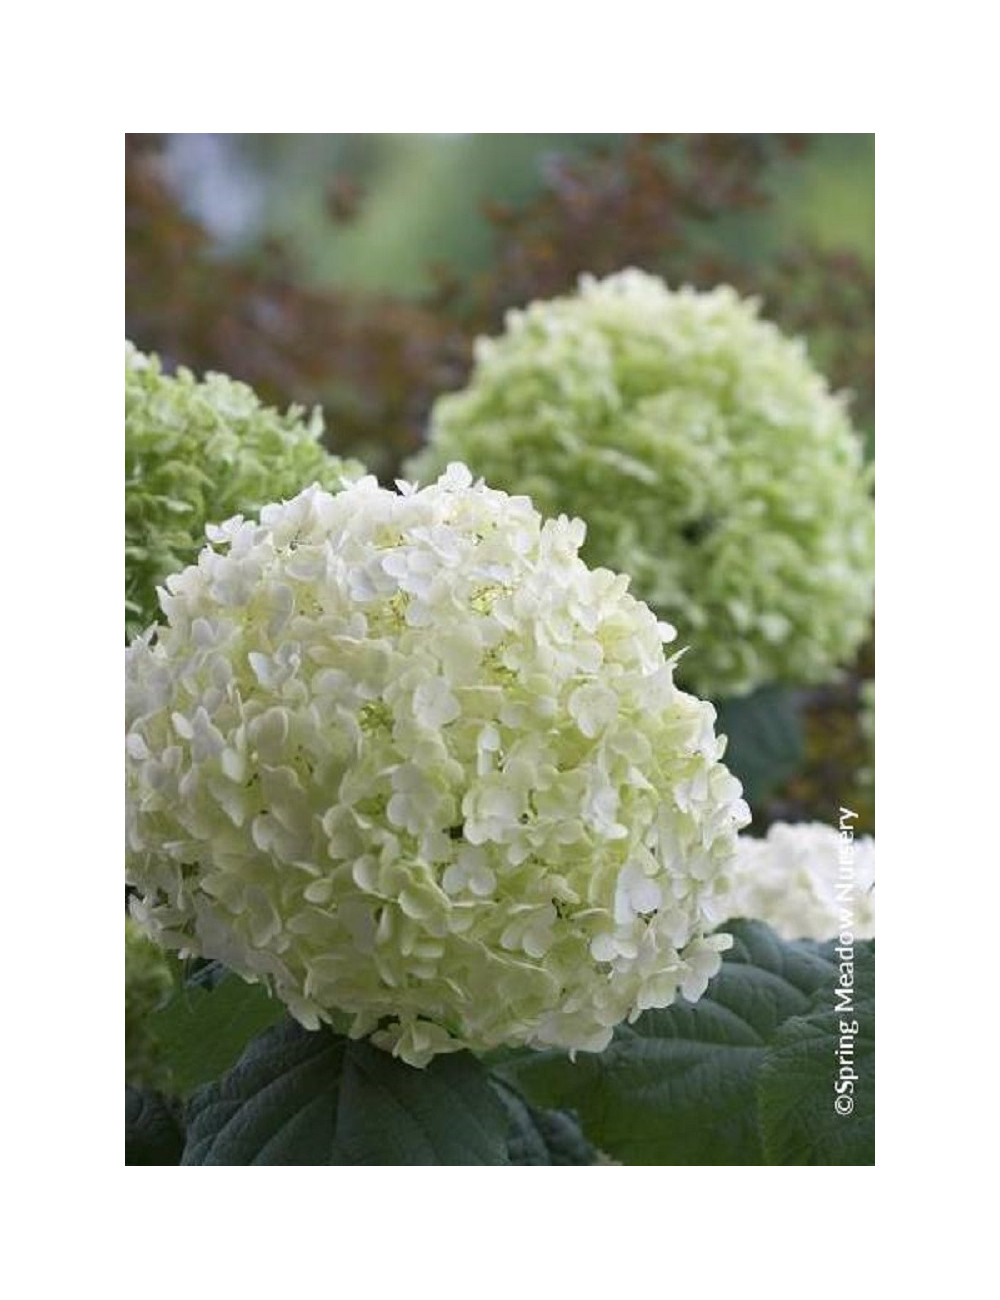 HYDRANGEA arborescens PW ® STRONG ANNABELLE ® (Hortensia arbustif)2